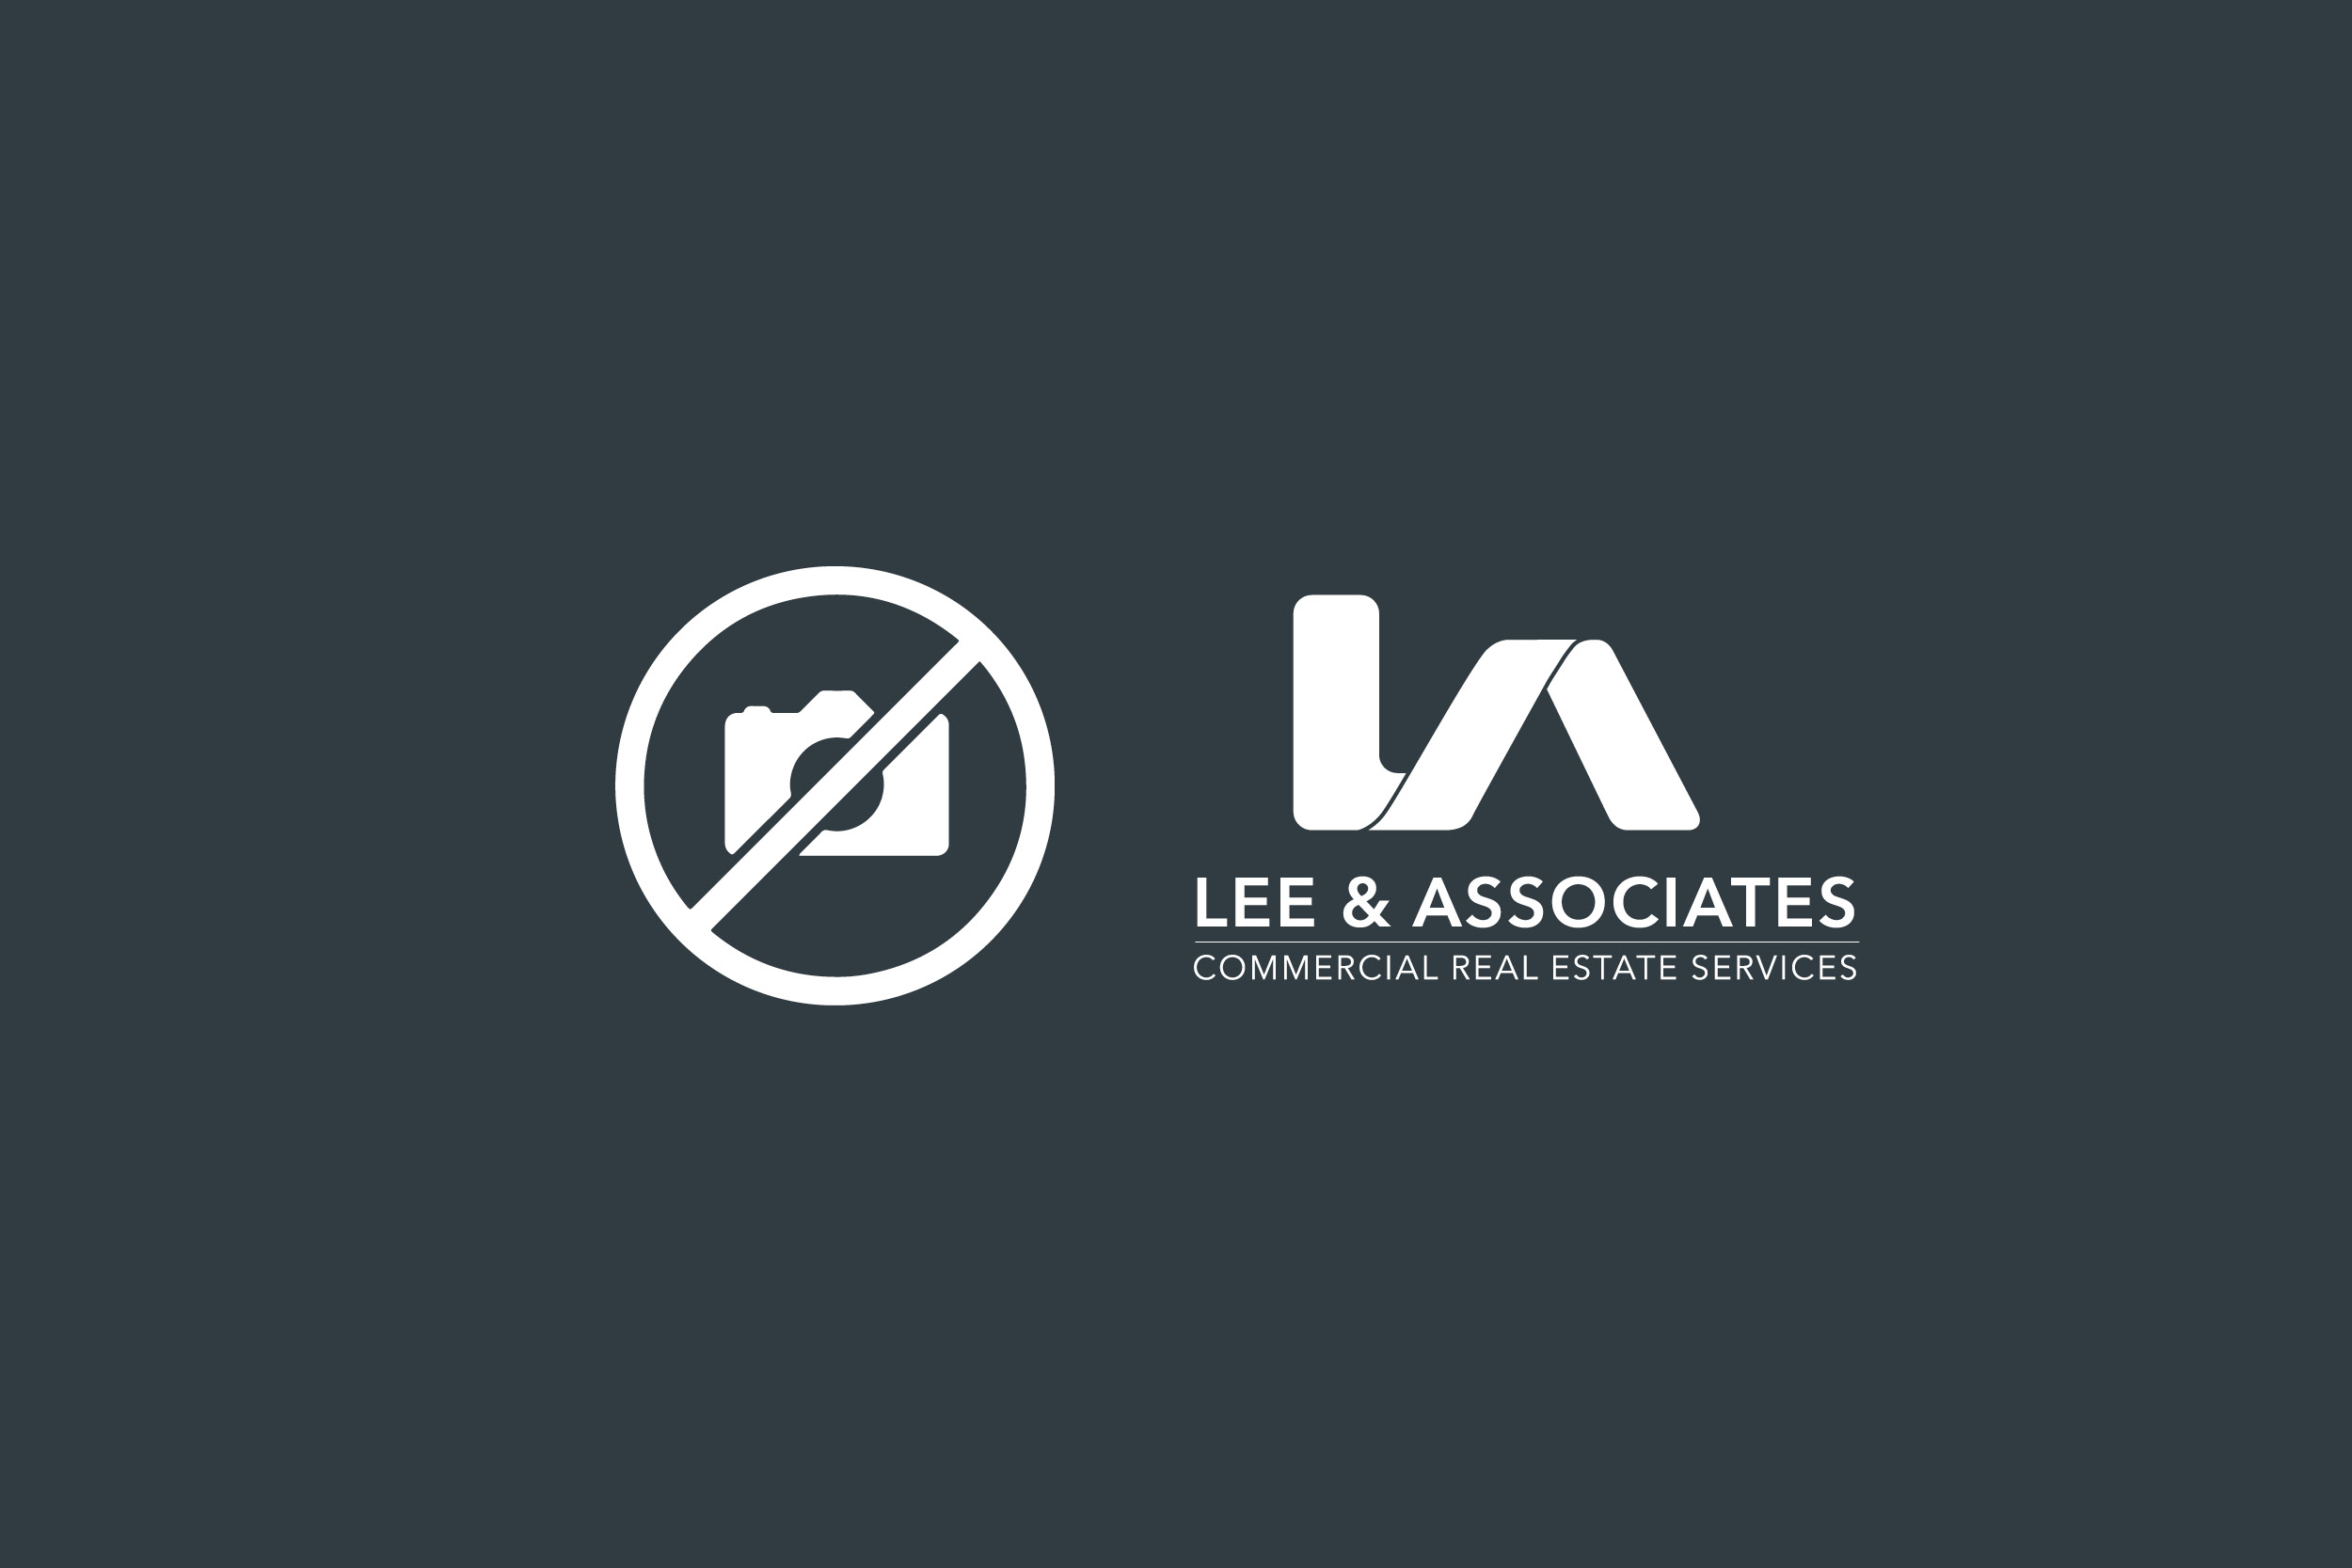 Lee & Associates Dallas Fort Worth Negotiates a 4,000 SF Industrial Lease Transaction